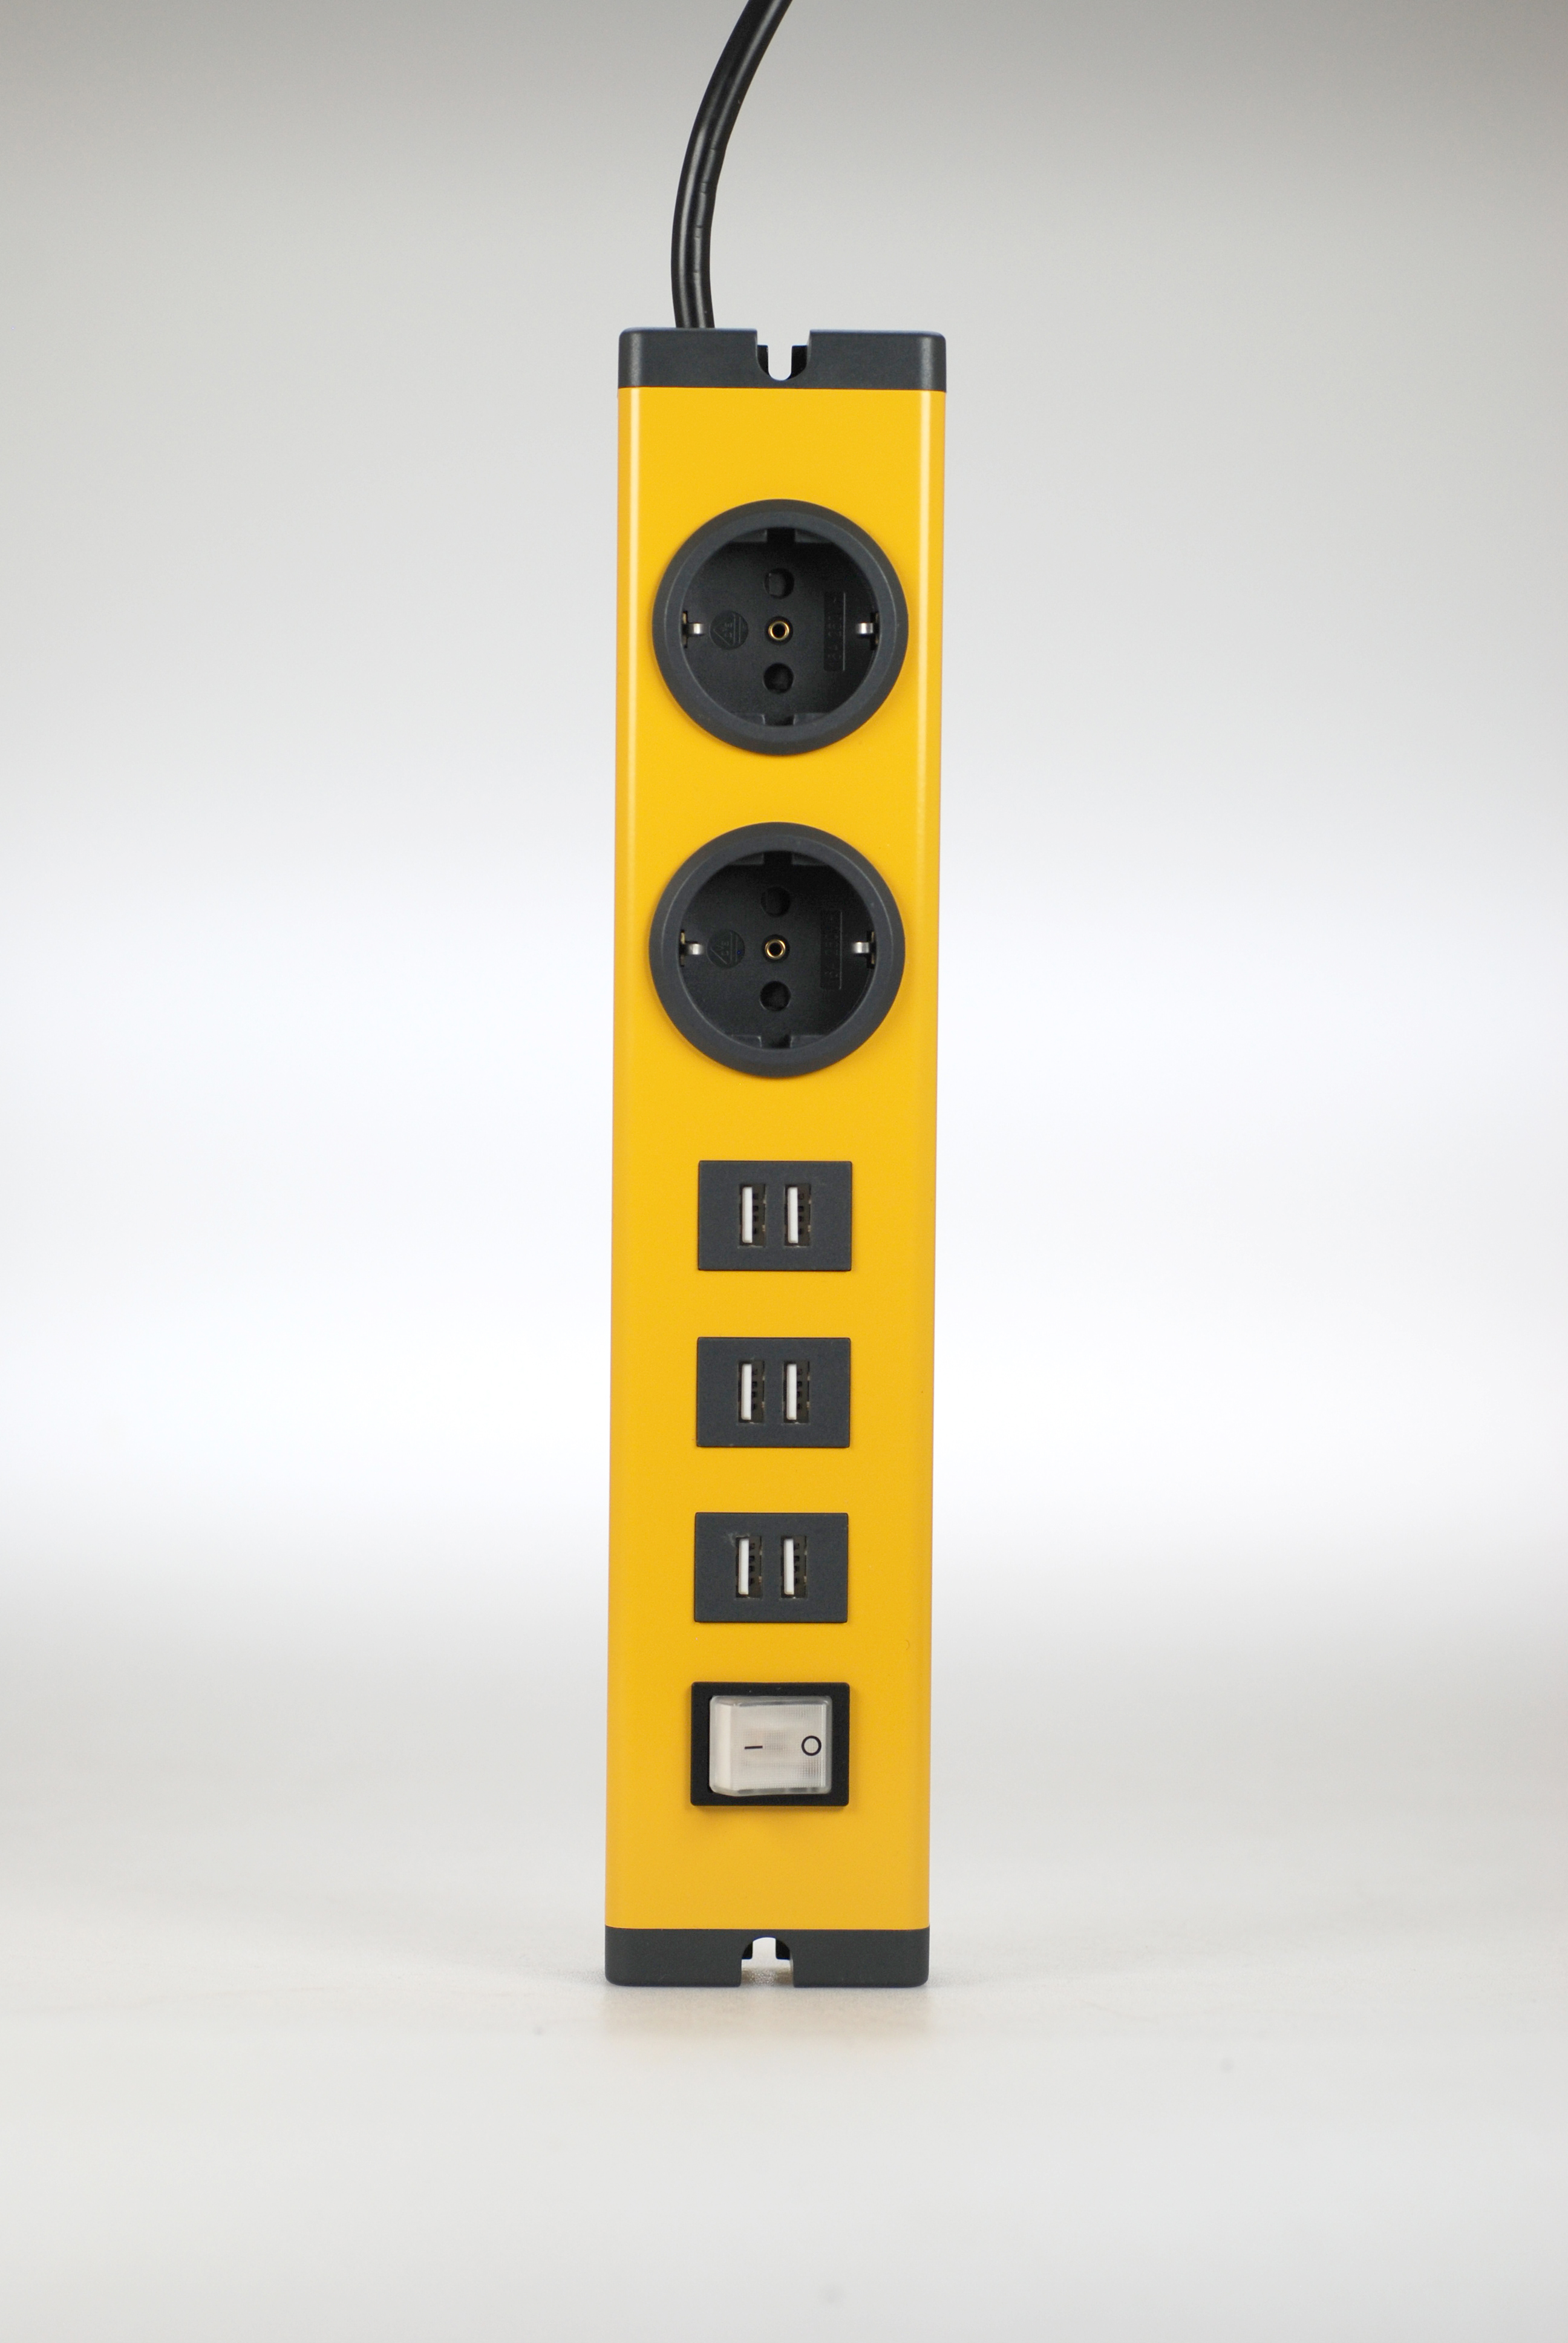 BODO Design Steckdosenleiste yellow curry 2-fach + 3x USB-A Doppelport